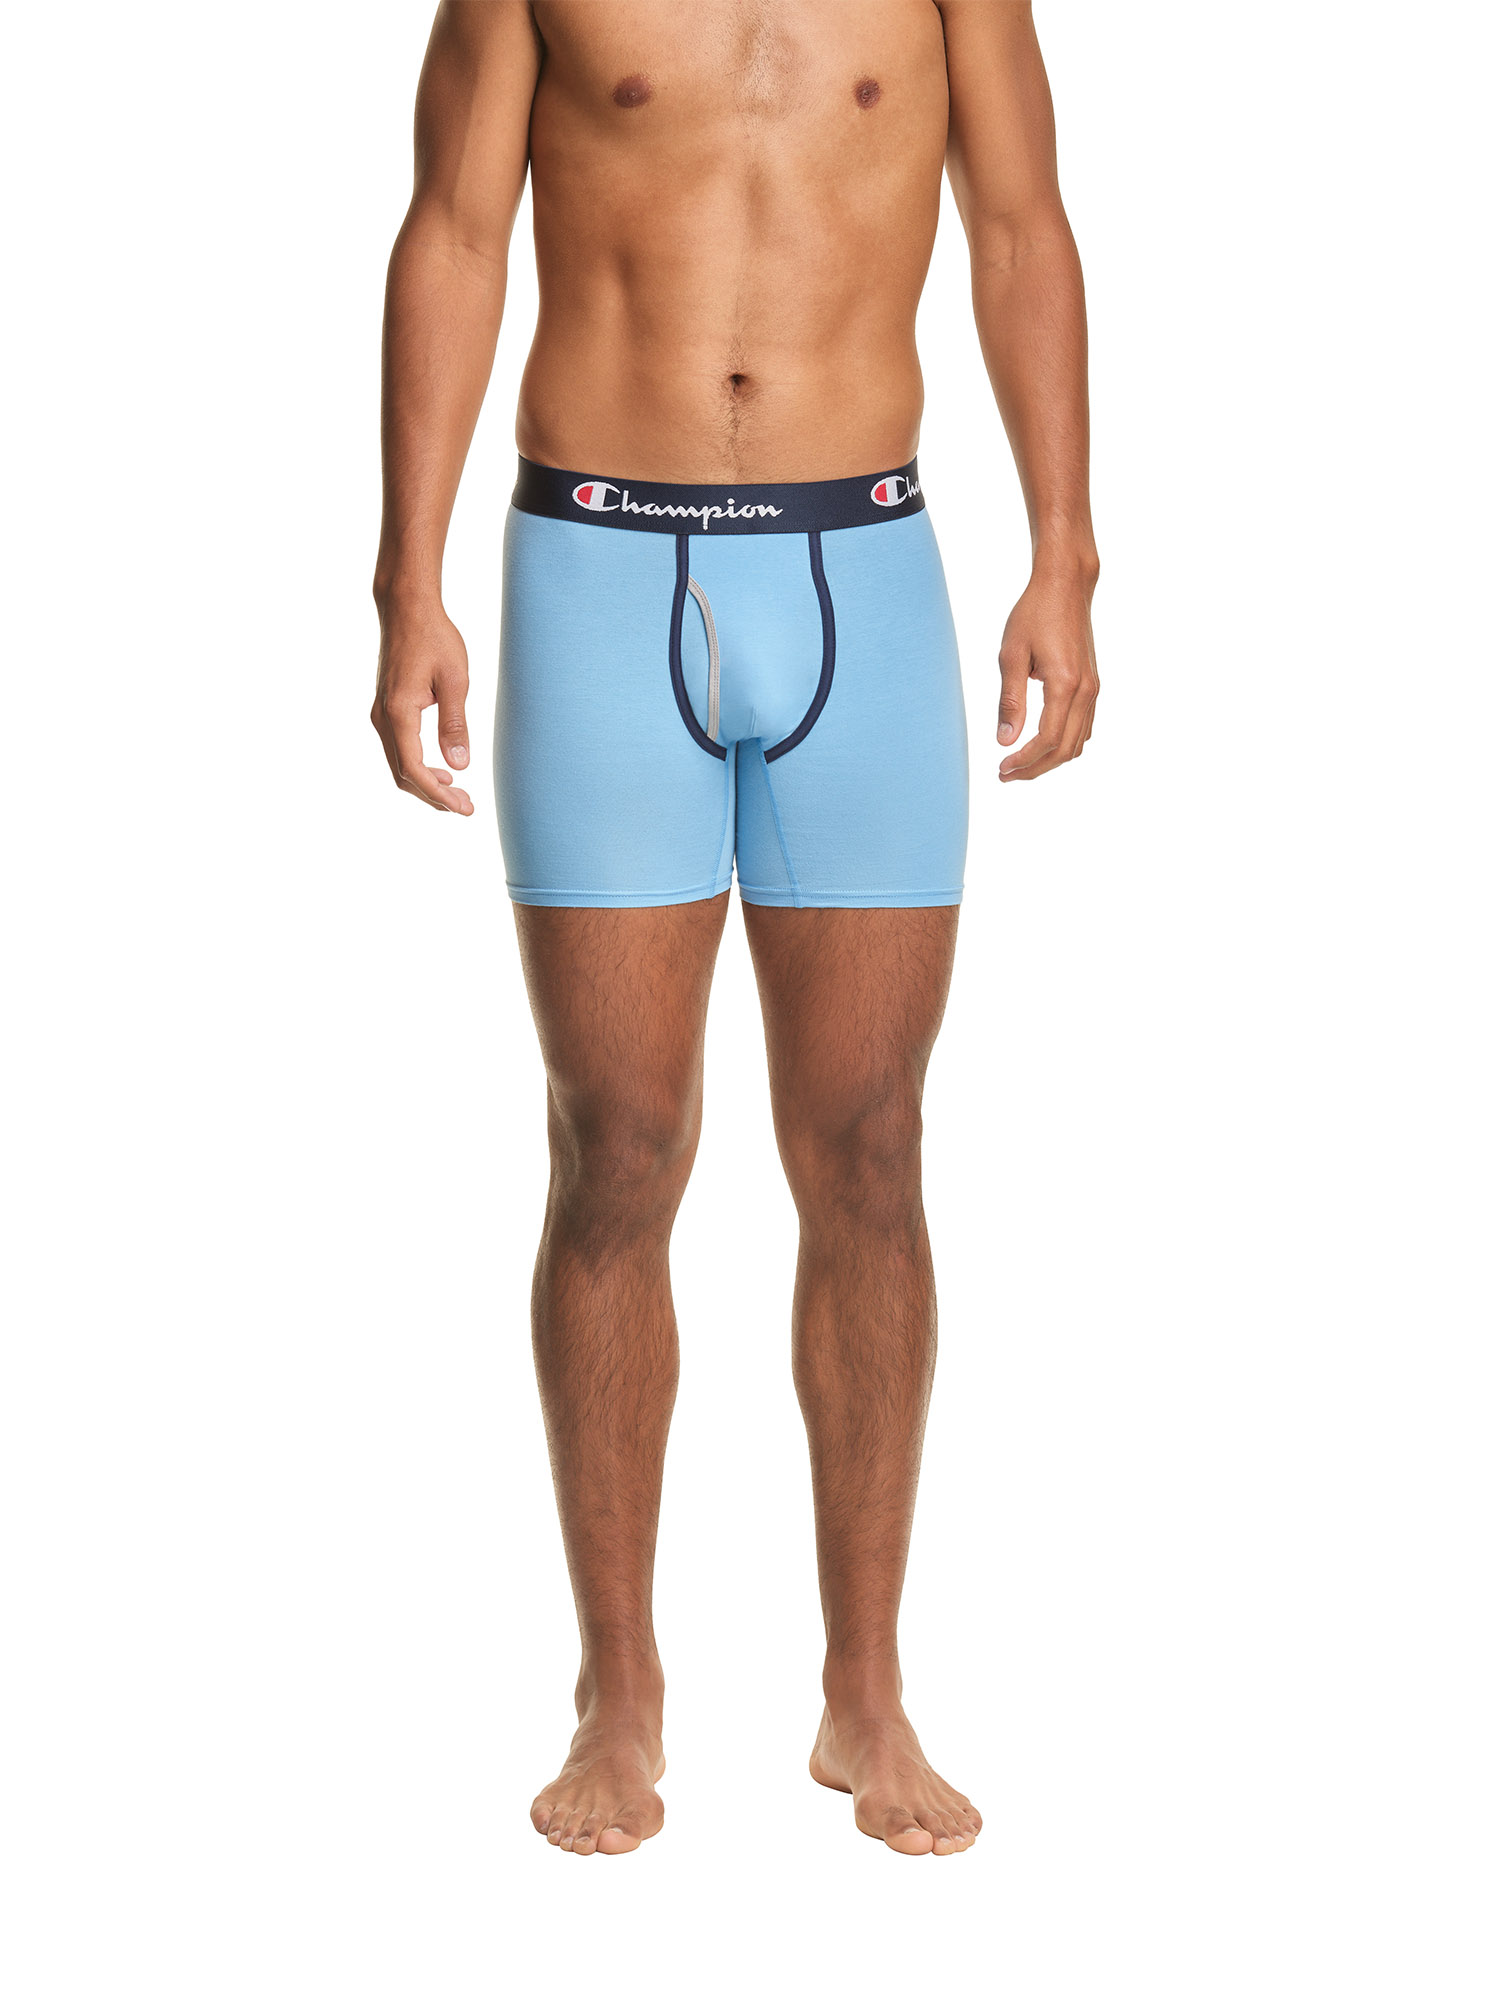 Quần Underwear - Champion Adult Men's Everyday Comfort Boxer Briefs - Màu Random - UNC-003